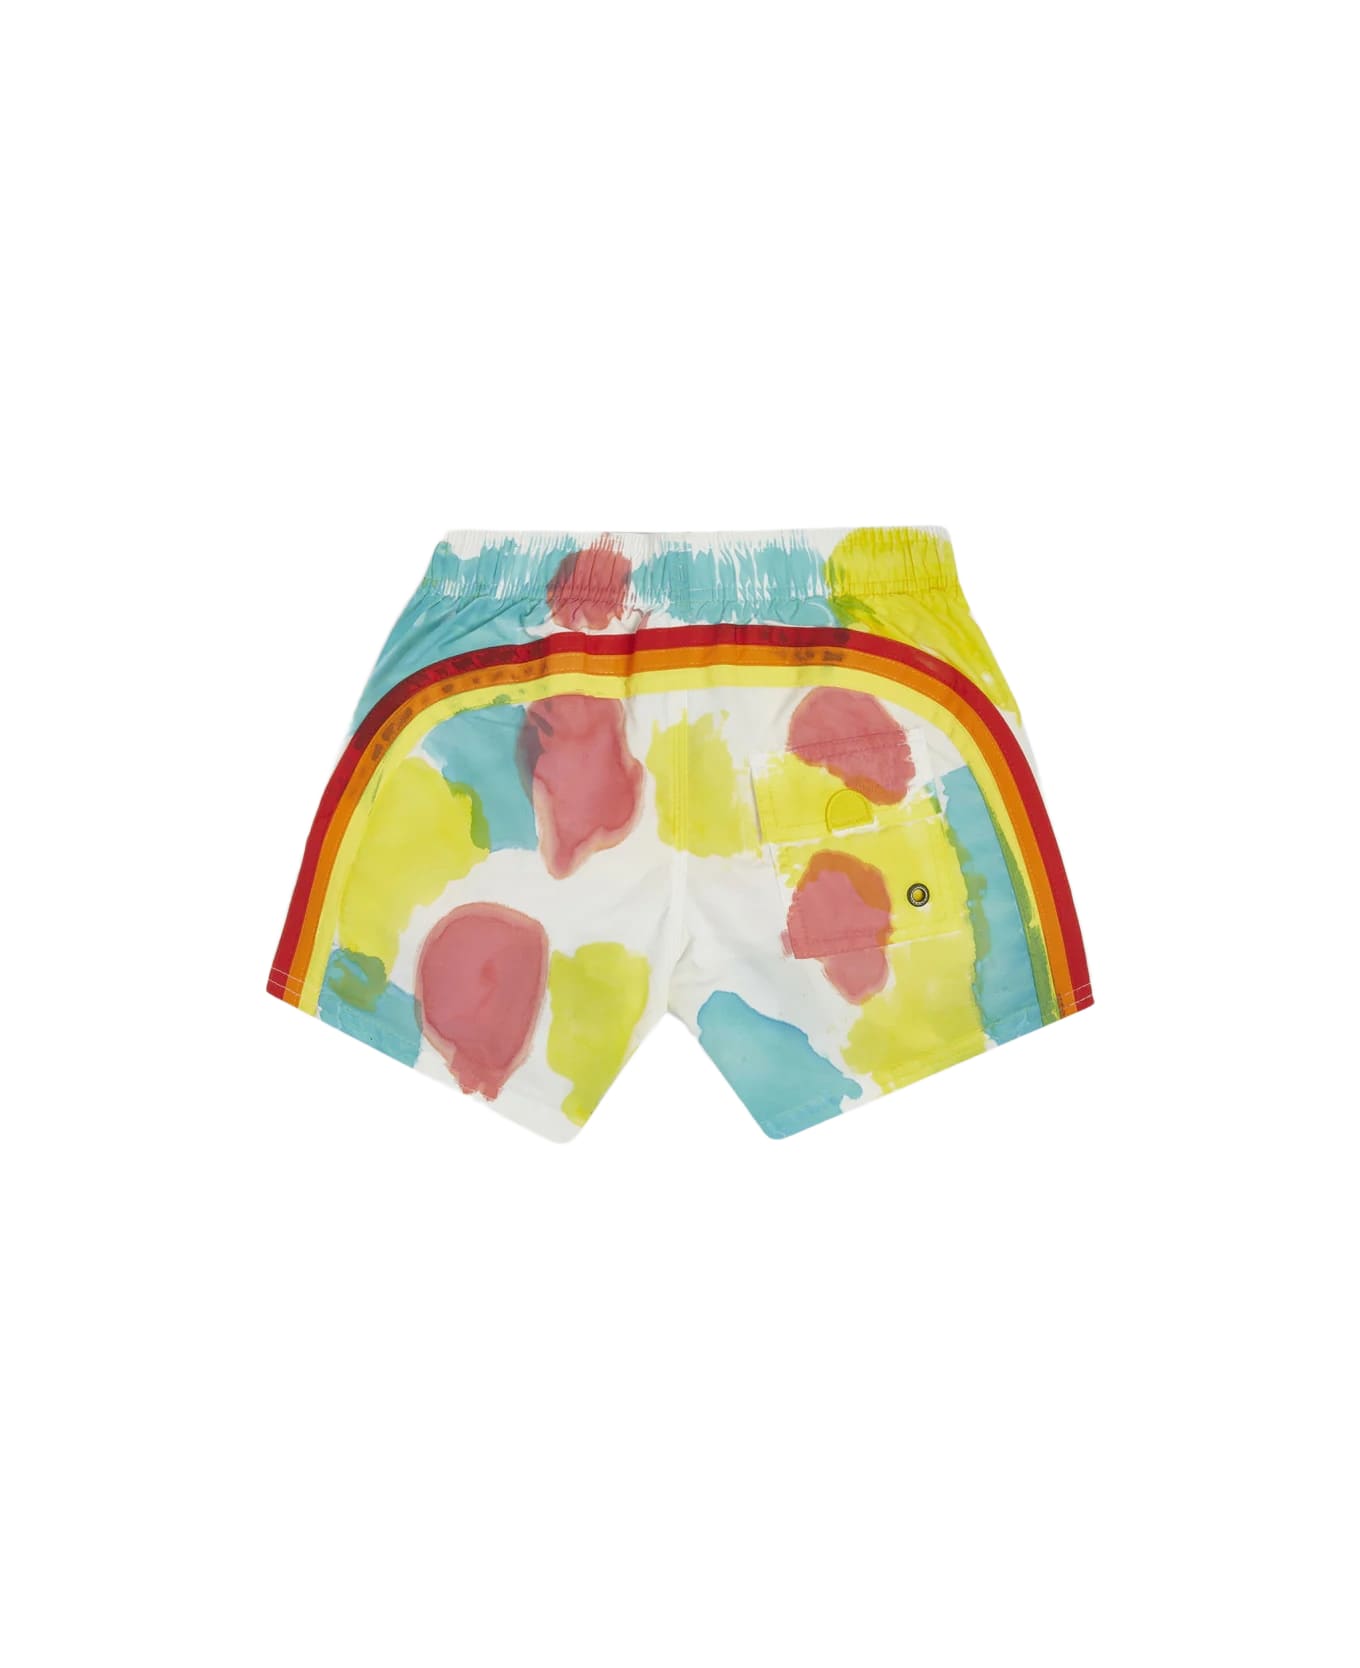 Sundek Swimsuit With Print - Multicolor 水着